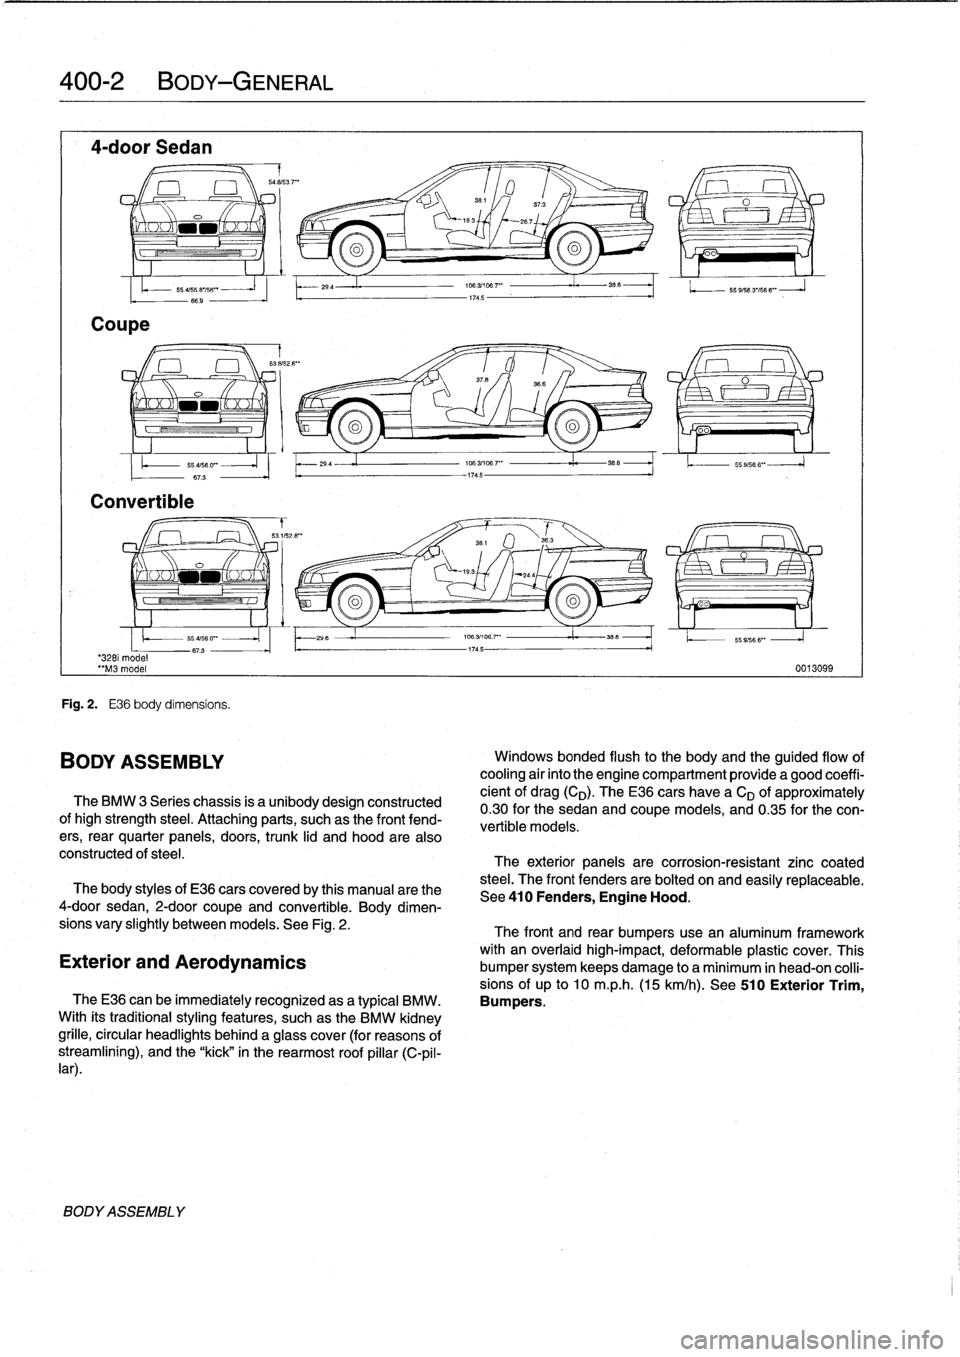 BMW 323i 1995 E36 Workshop Manual 
400-2
BODY-GENERAL

4-door
Sedan

Coupe

-
saas3
.7""

351
/

	

37
.3
O

	

I
x
`-193

	

267

o
oa

3281
model
"M3
model

Convertible

BODYASSEMBLY

55
ass
.e
iss
""
-
66
.9
-

Fig
.
2
.

	

E36
b